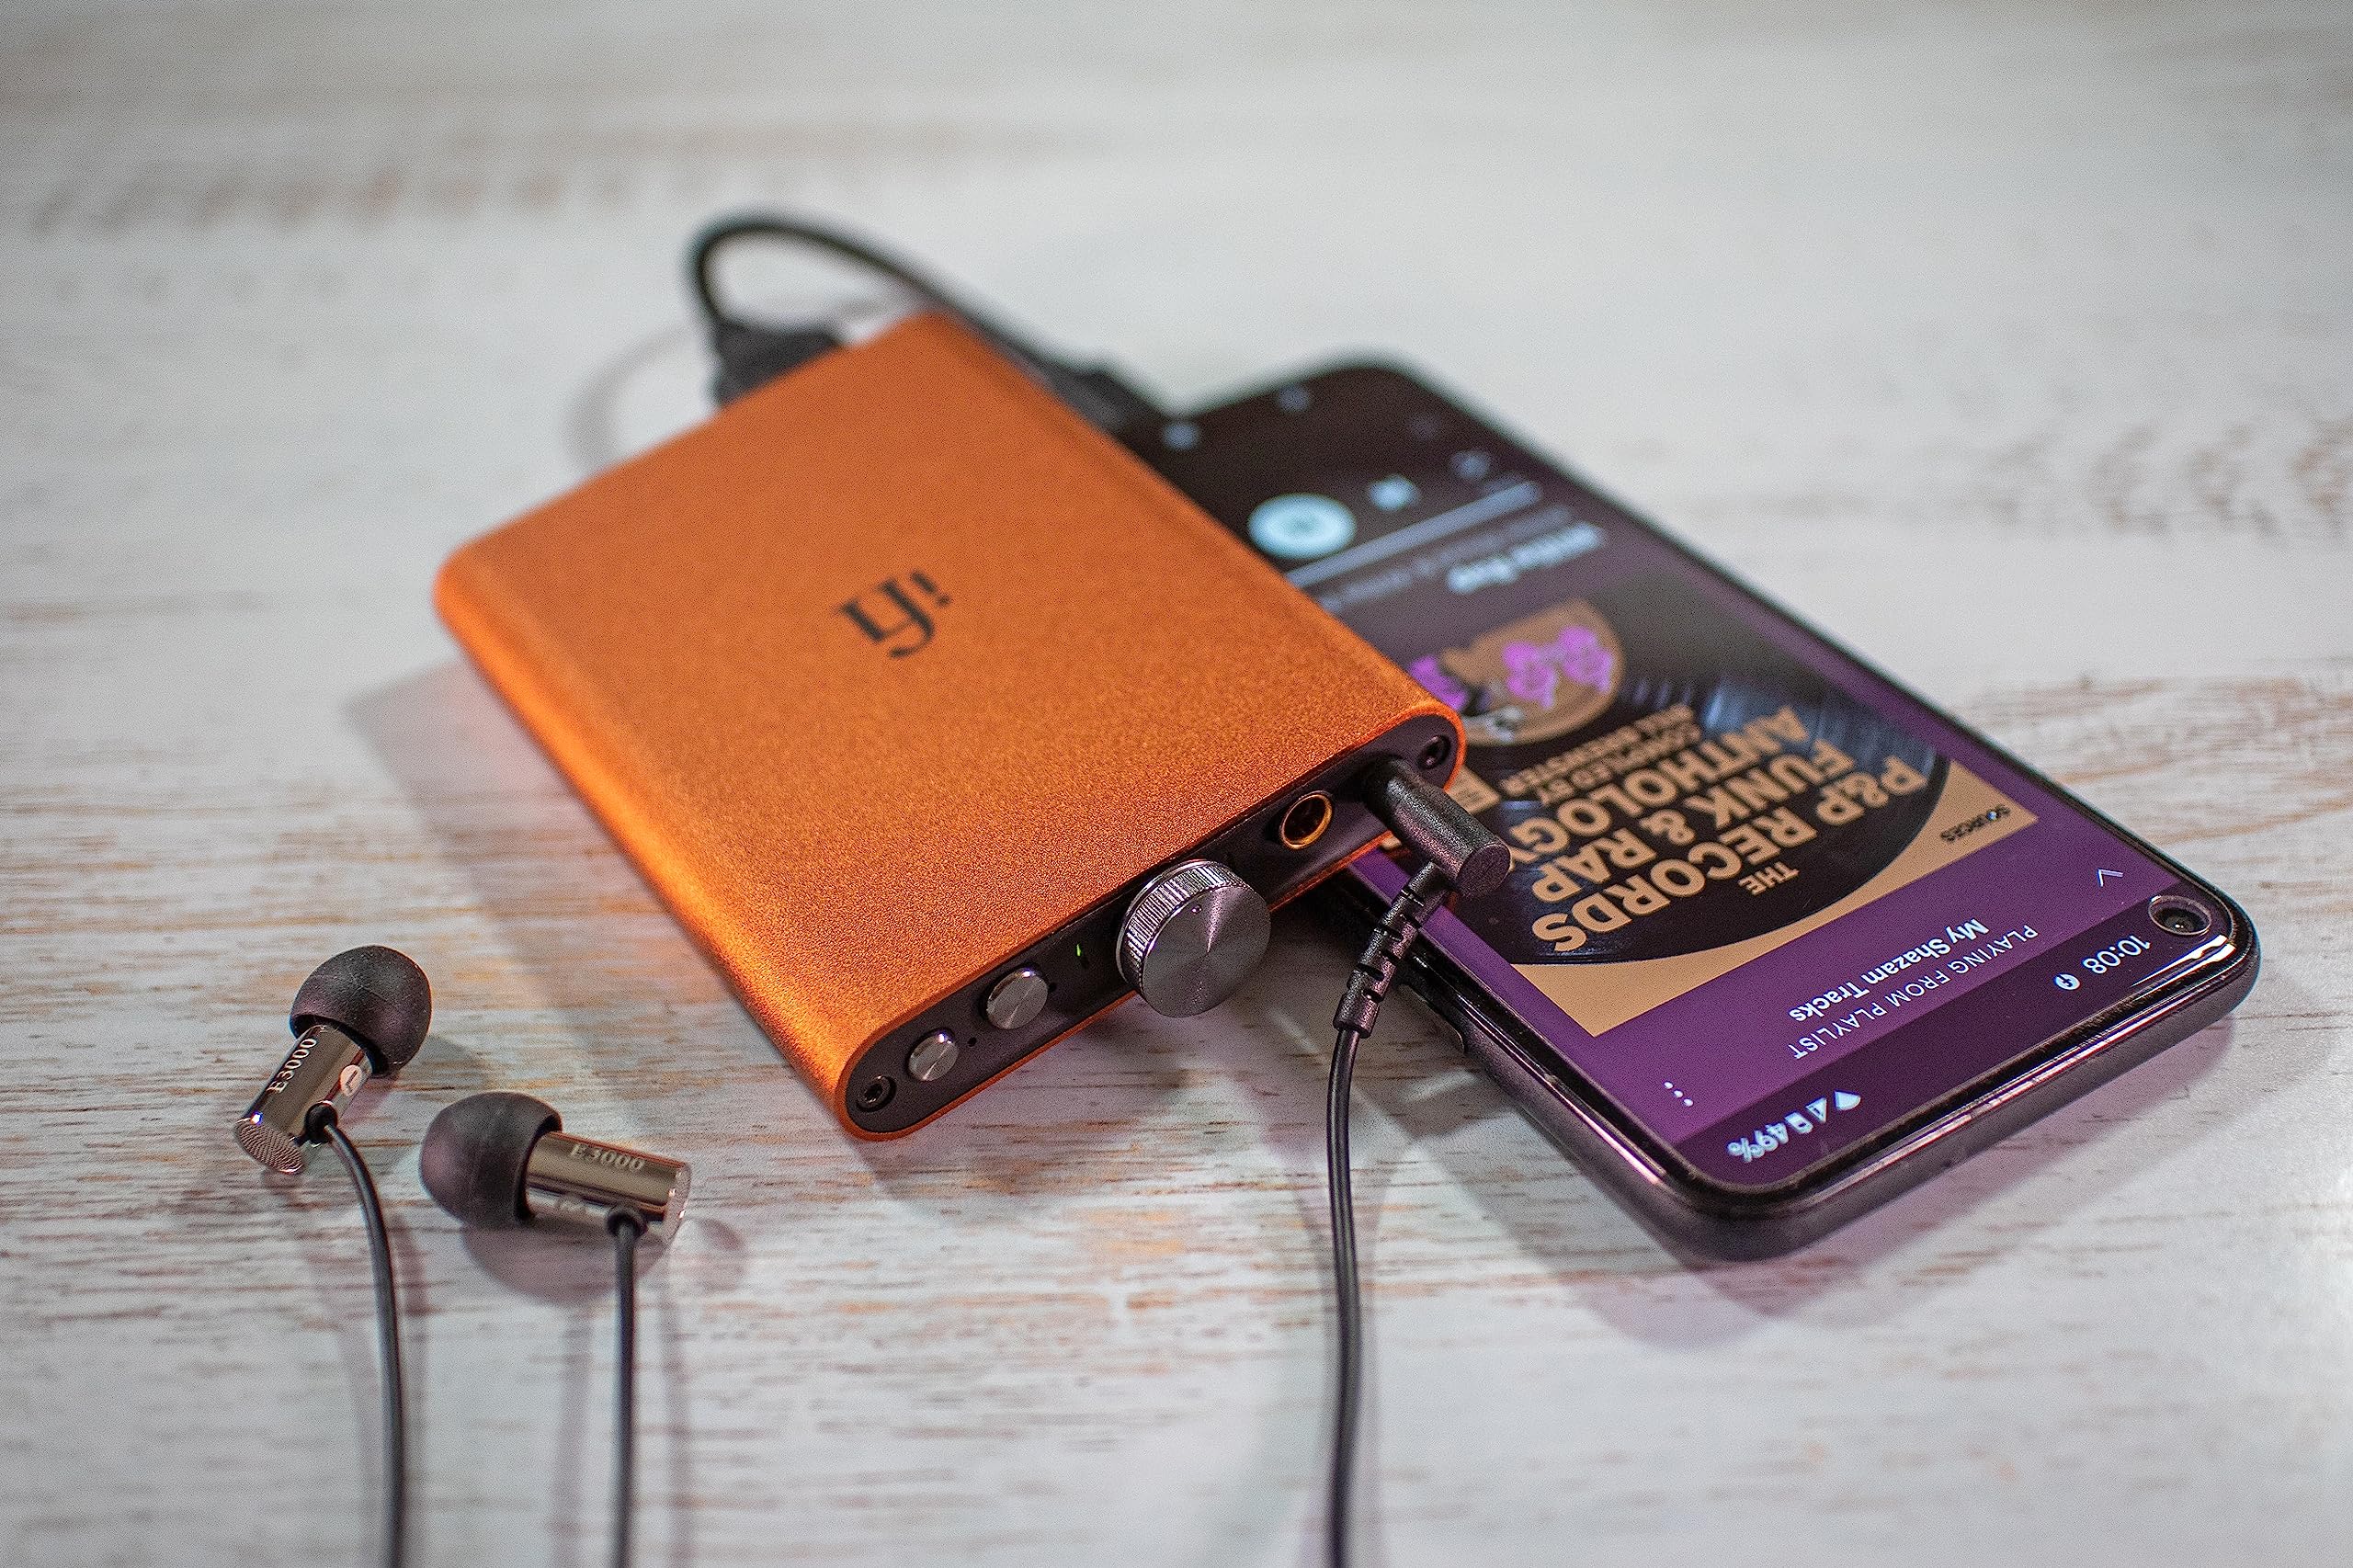 iFi's Latest Portable DAC Enhances Digital Audio Quality